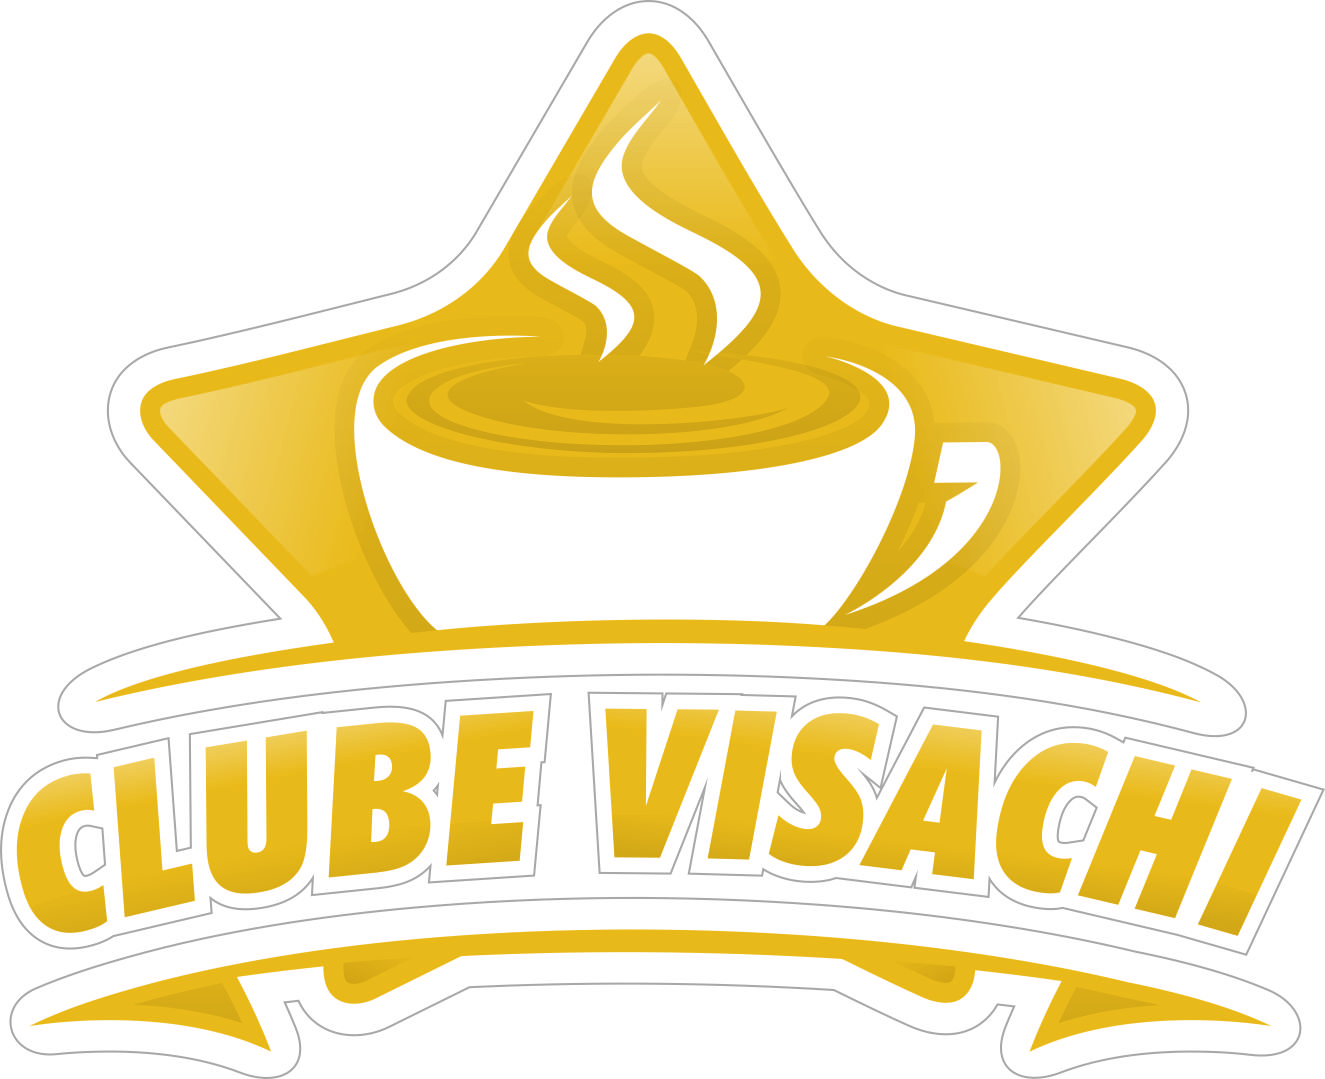 Clube Visachi